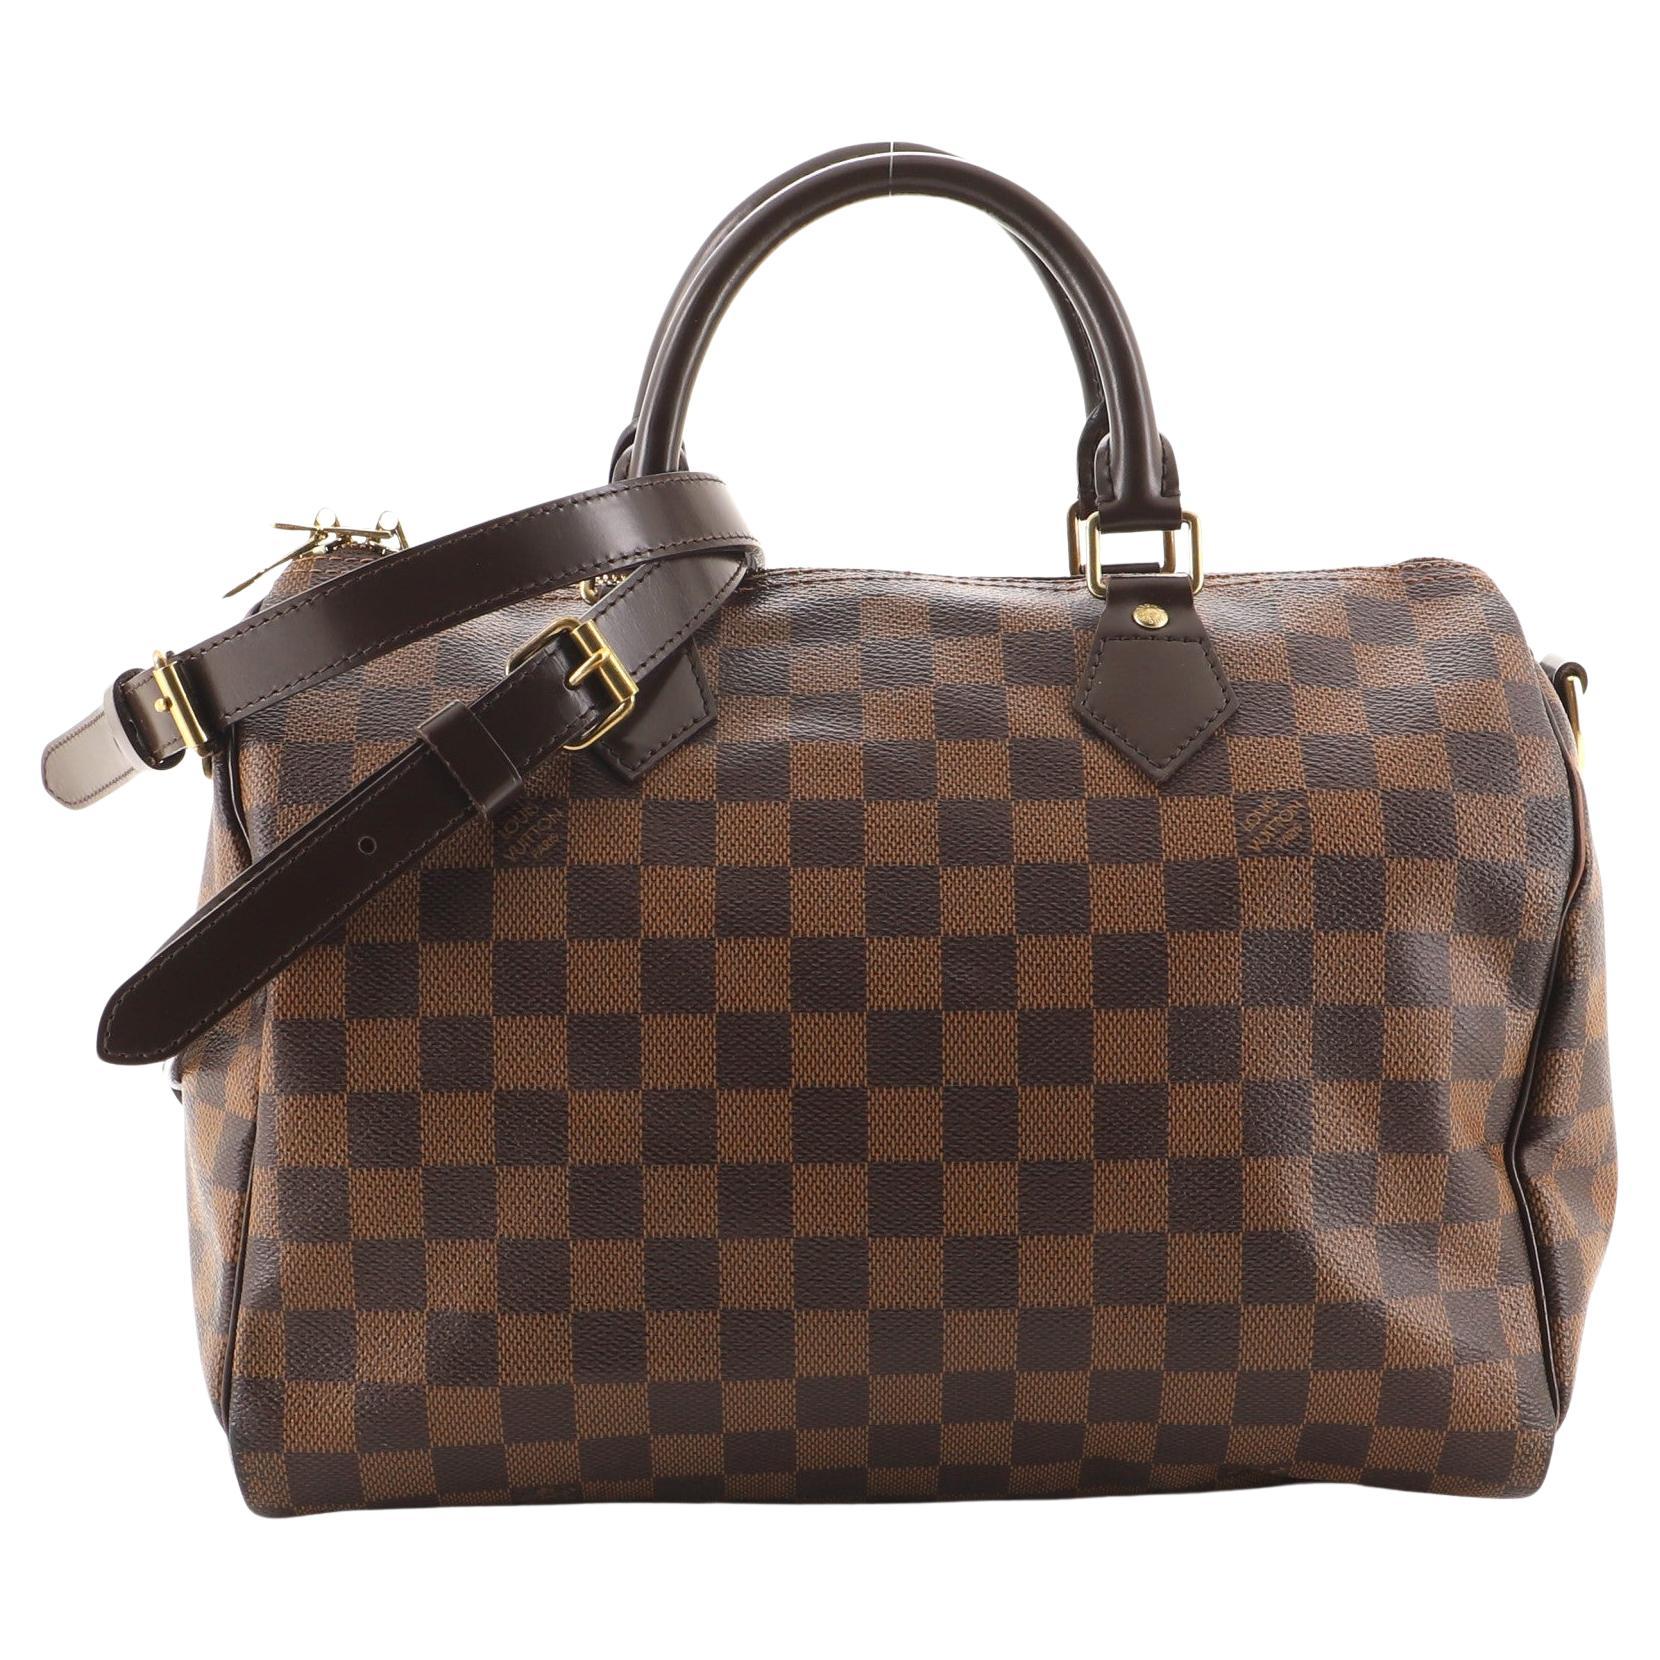 Louis Vuitton Speedy Bandouliere Bag Damier 30 For Sale